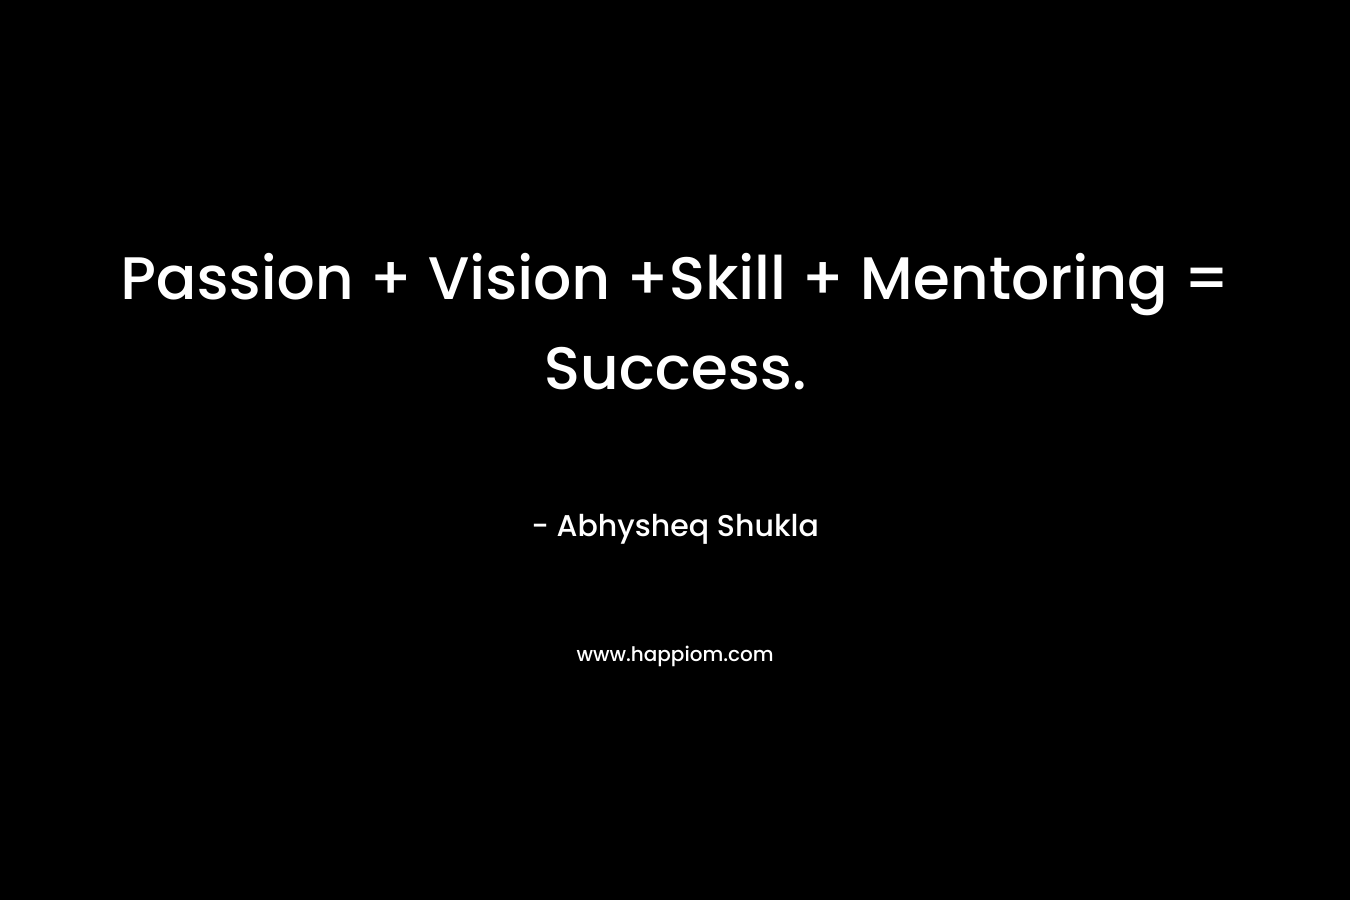 Passion + Vision +Skill + Mentoring = Success.